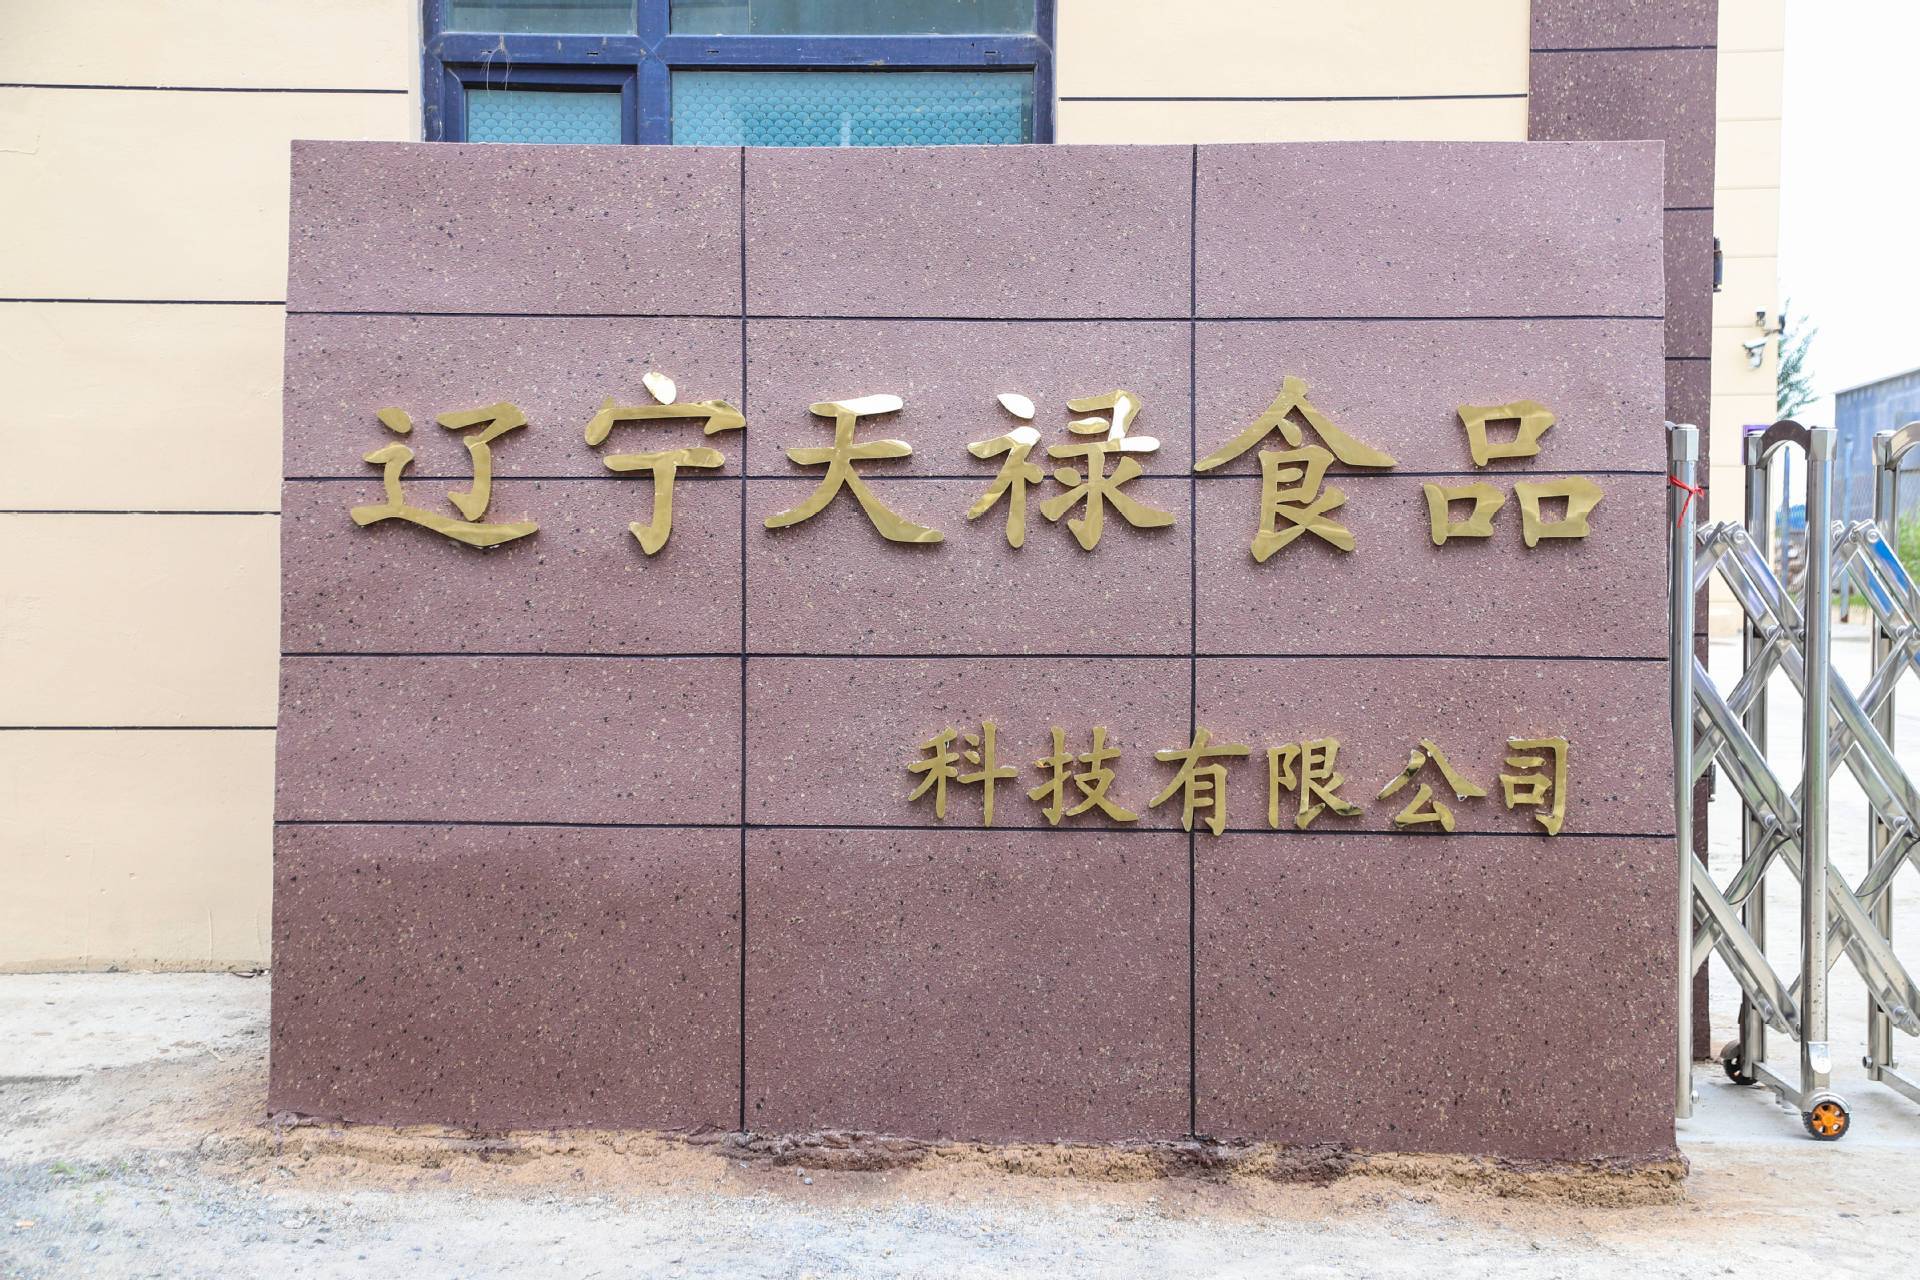   Shenyang Tianlu Food Co., Ltd